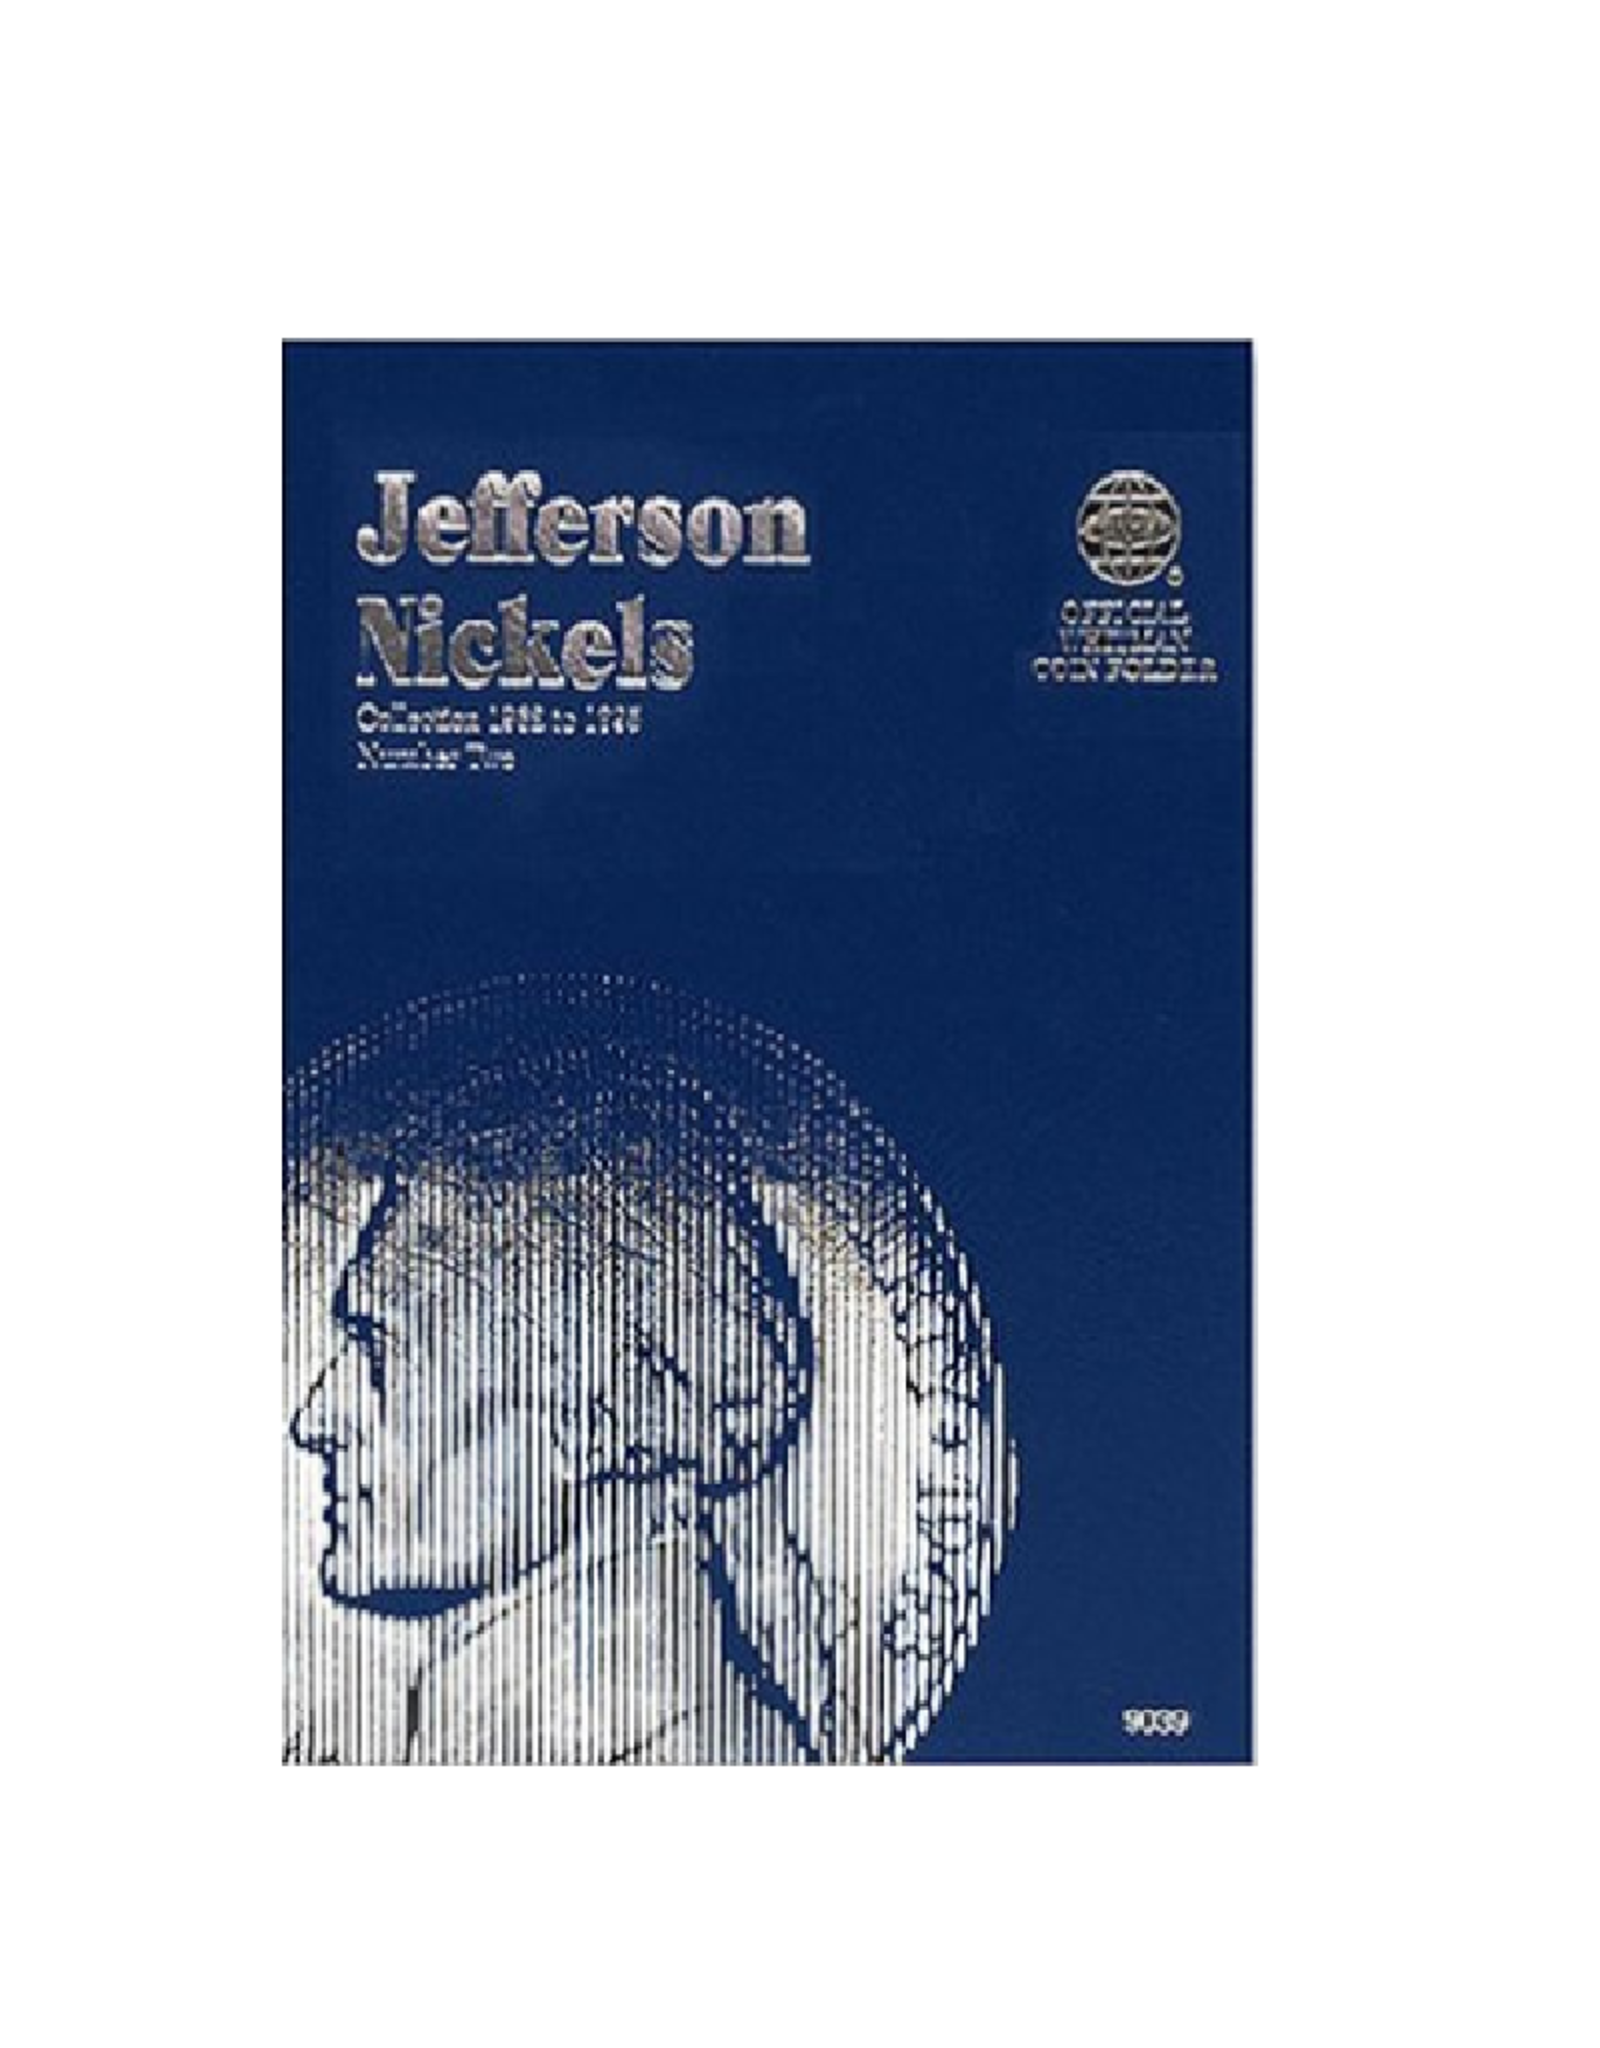 (S/O) Jefferson Nickels No. 2 (1962-1995)